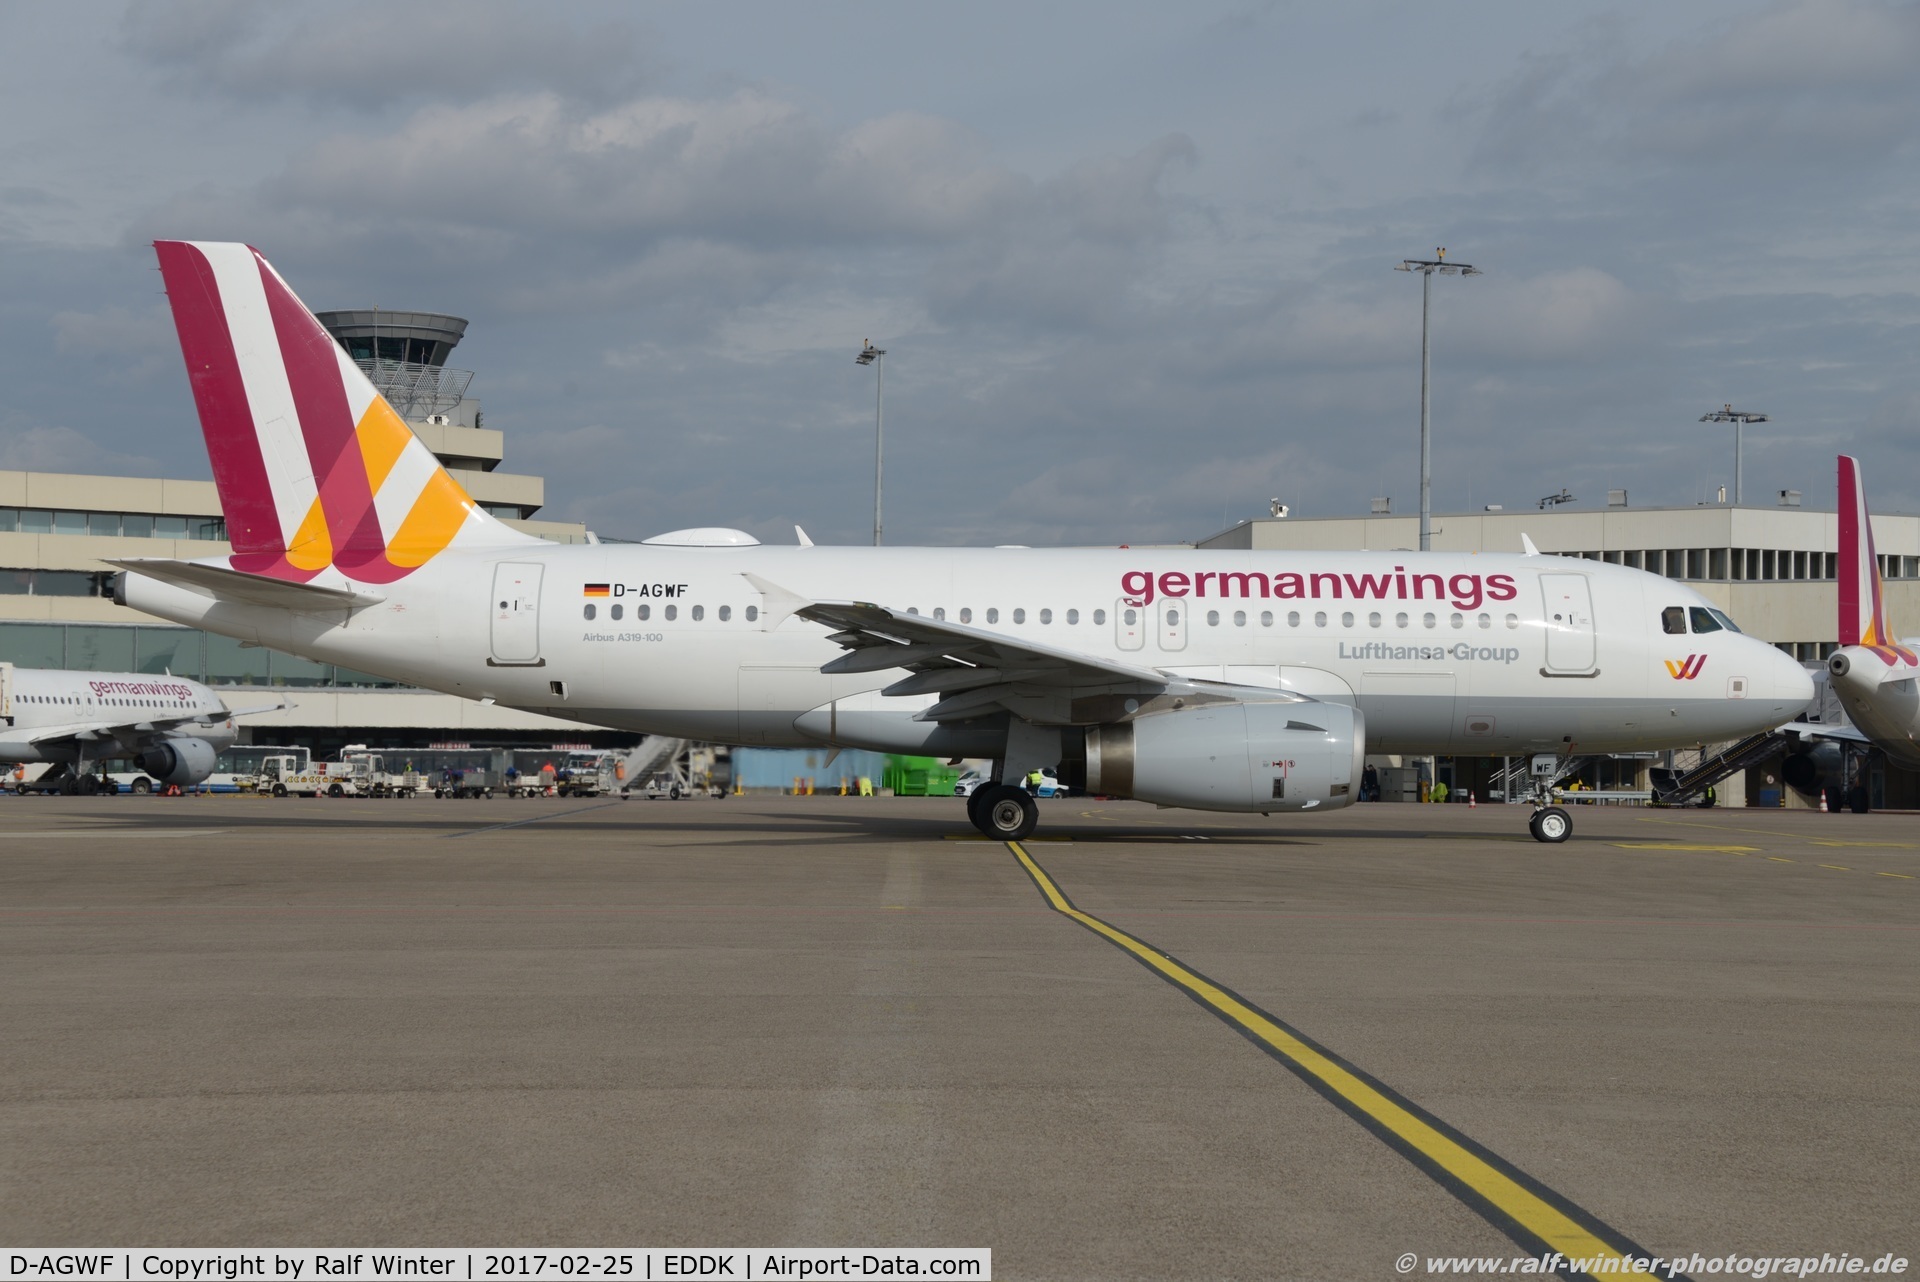 D-AGWF, 2007 Airbus A319-132 C/N 3172, Airbus A319-132 - 4U GWI Germanwings - 3172 - D-AGWF - 25.02.2017 - CGN